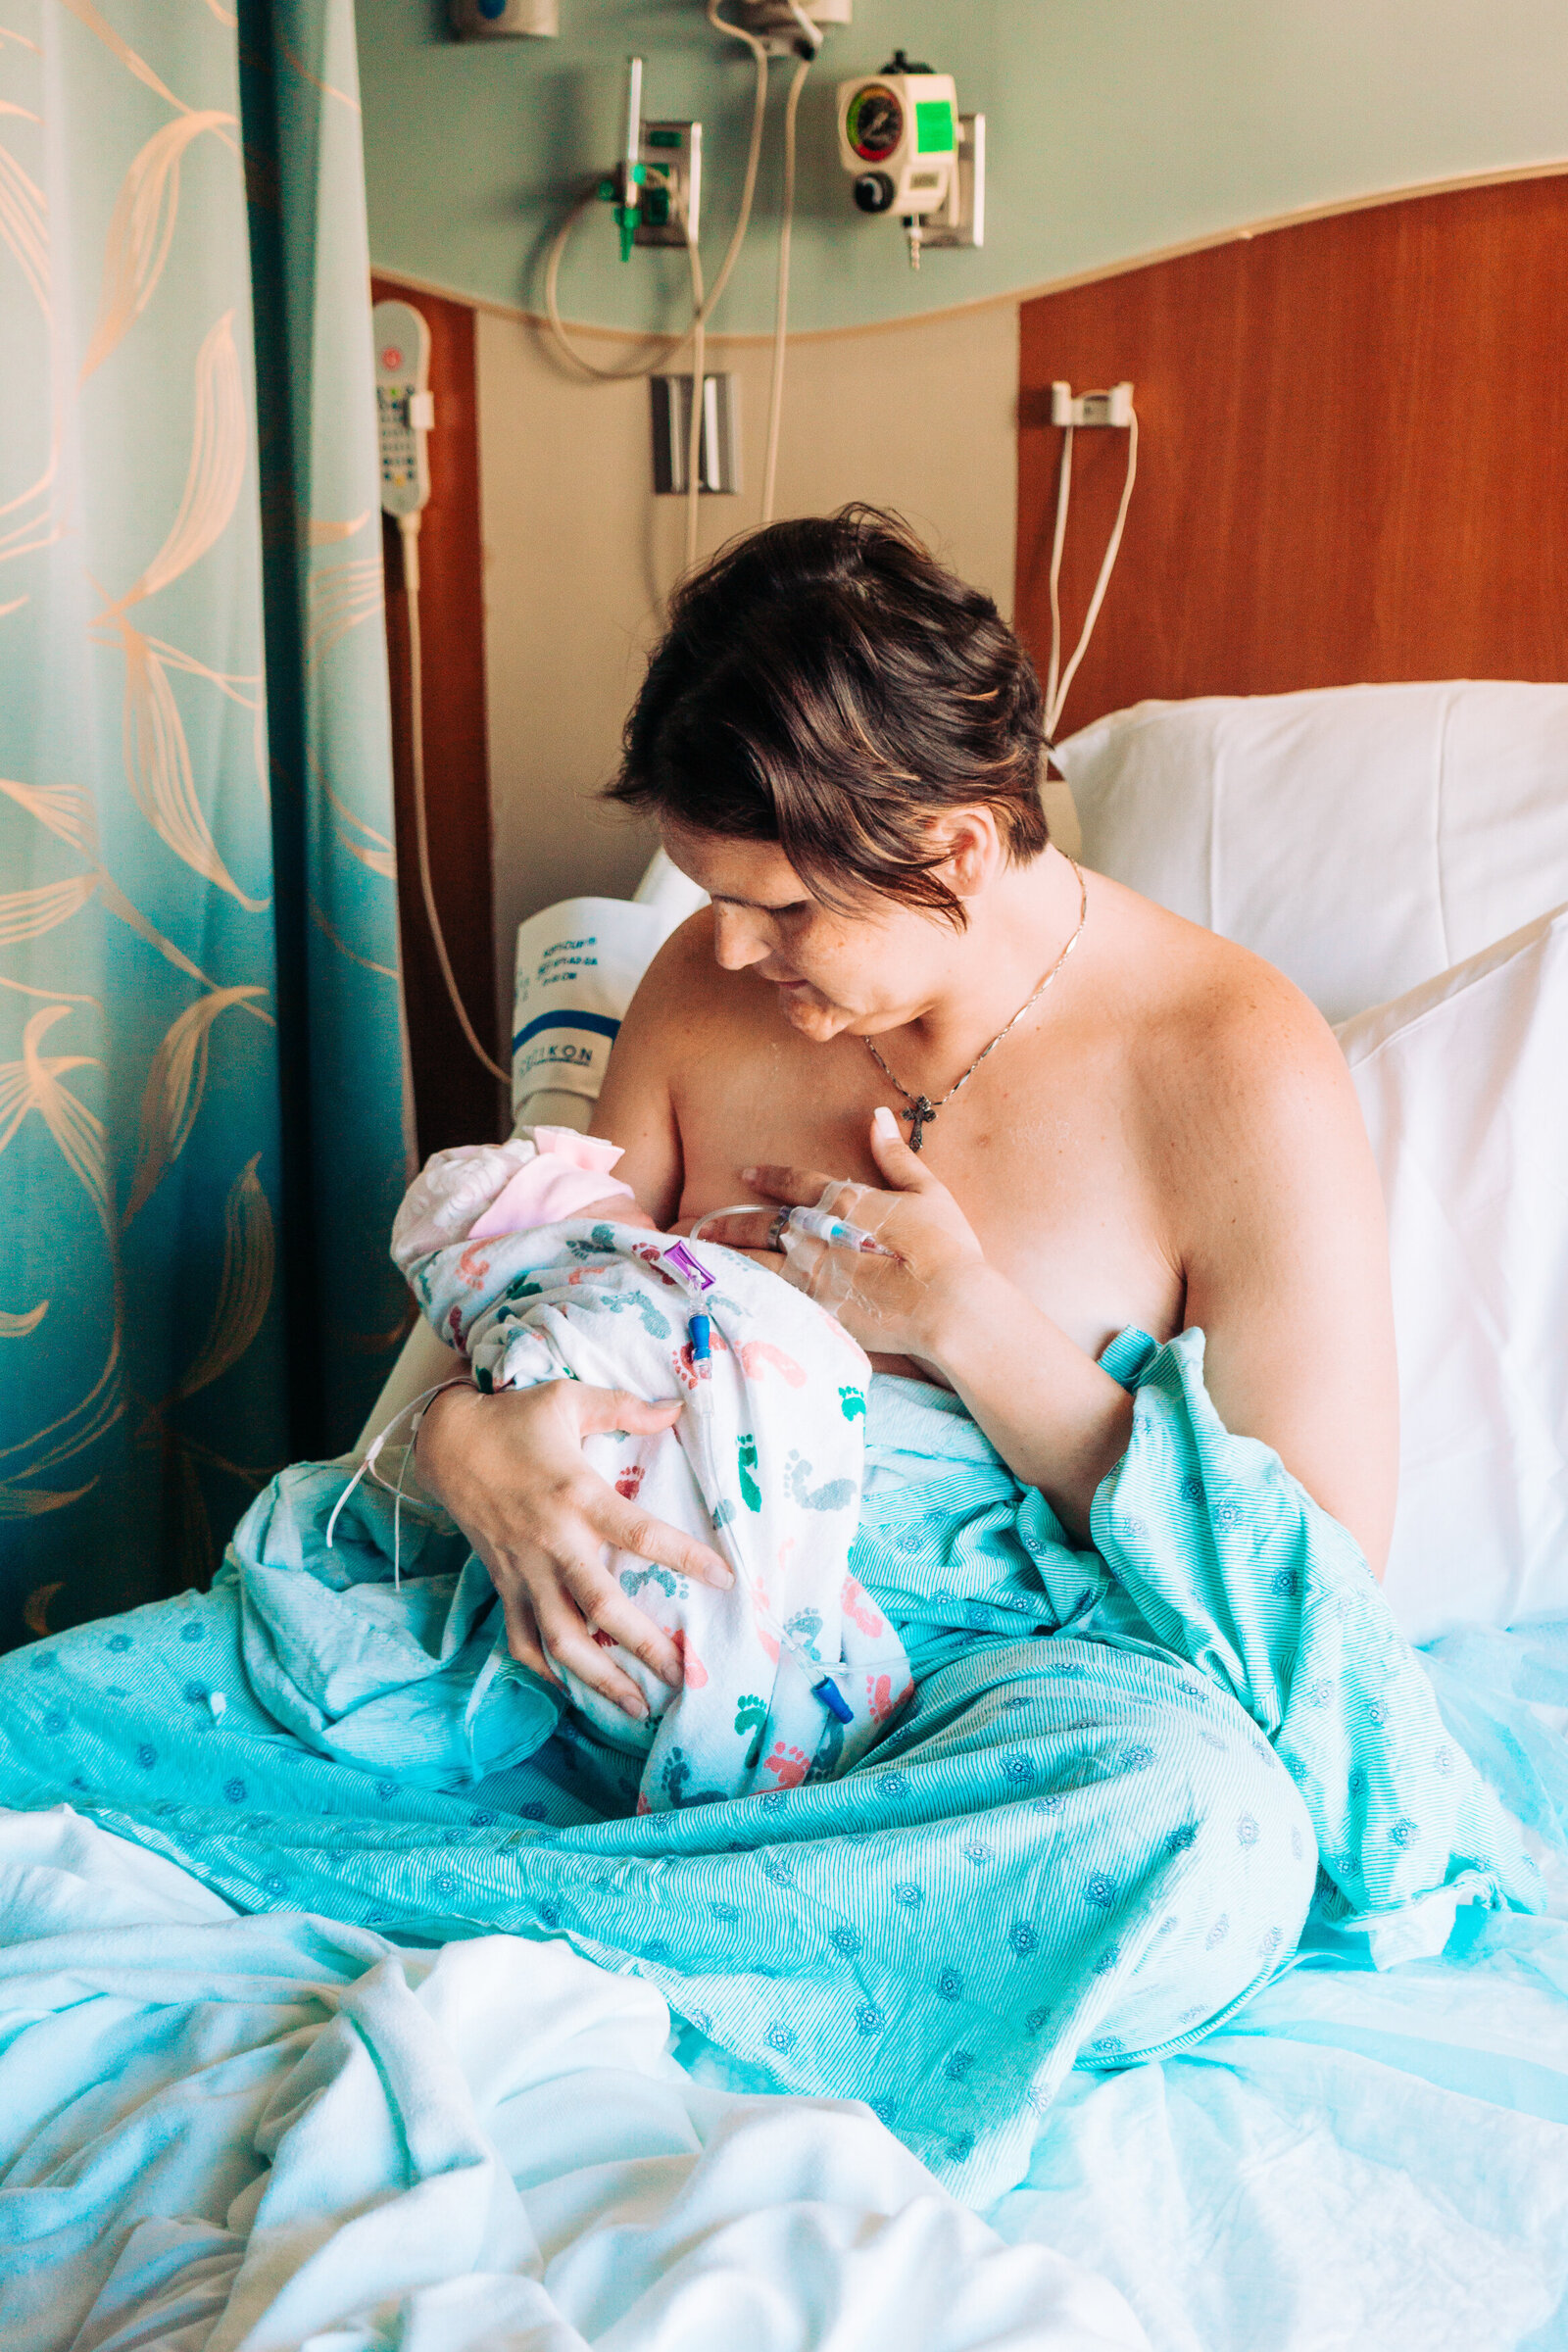 Mom breastfeeding her baby after birth in Boynton Beac, FL